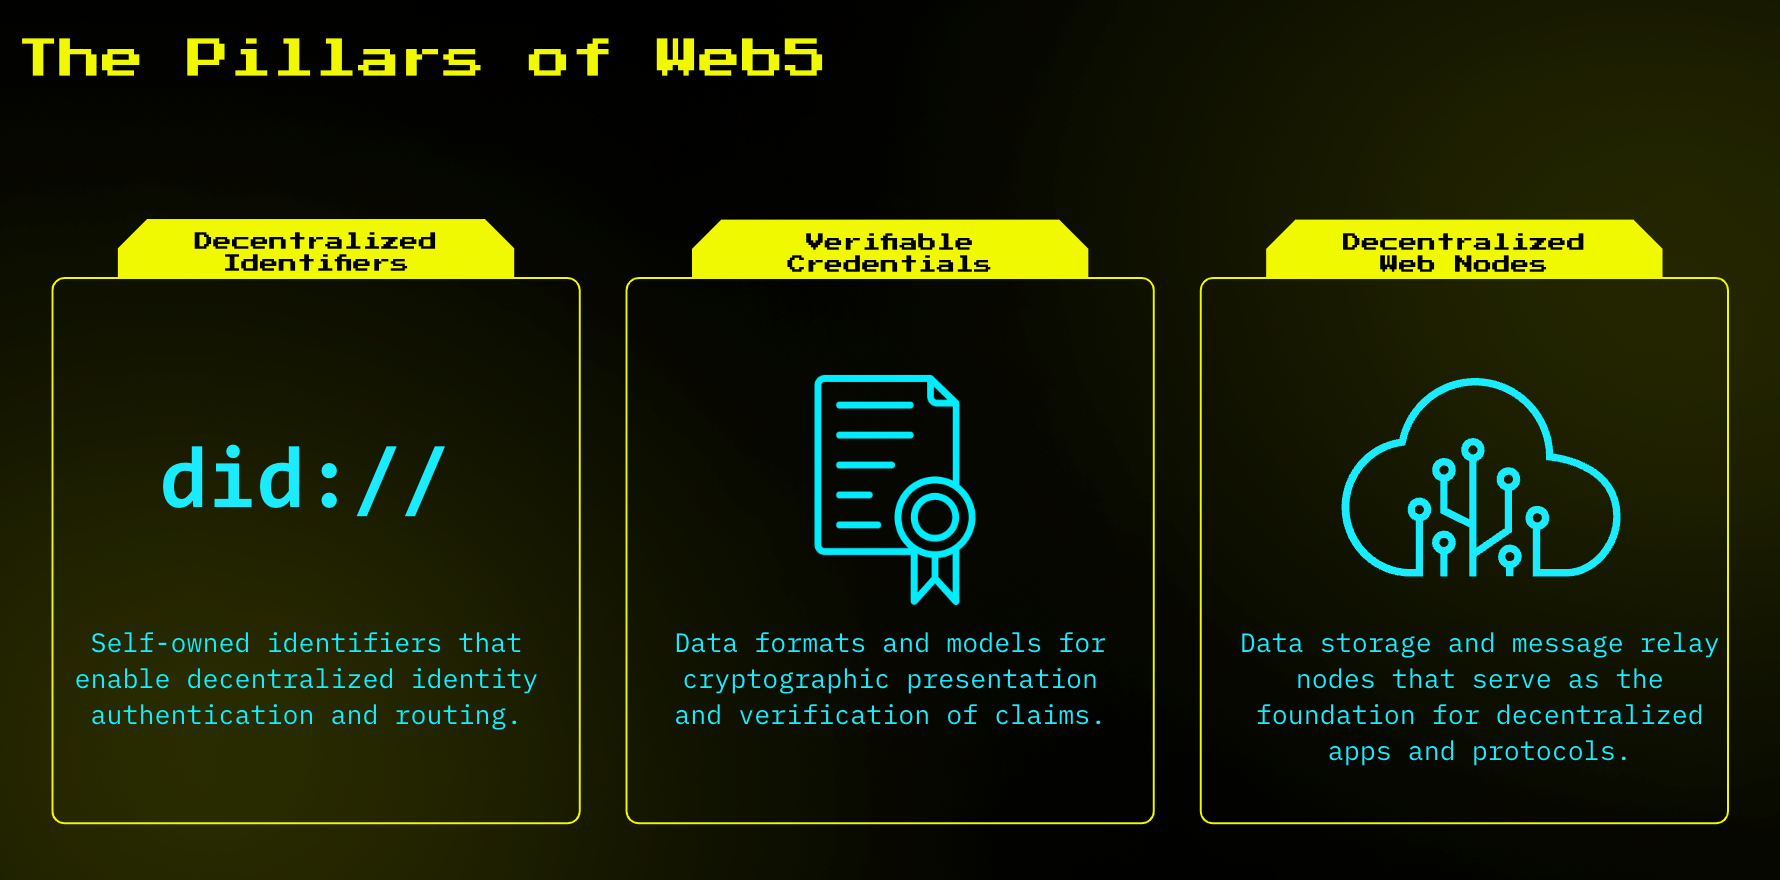 Core Pillars of Web5